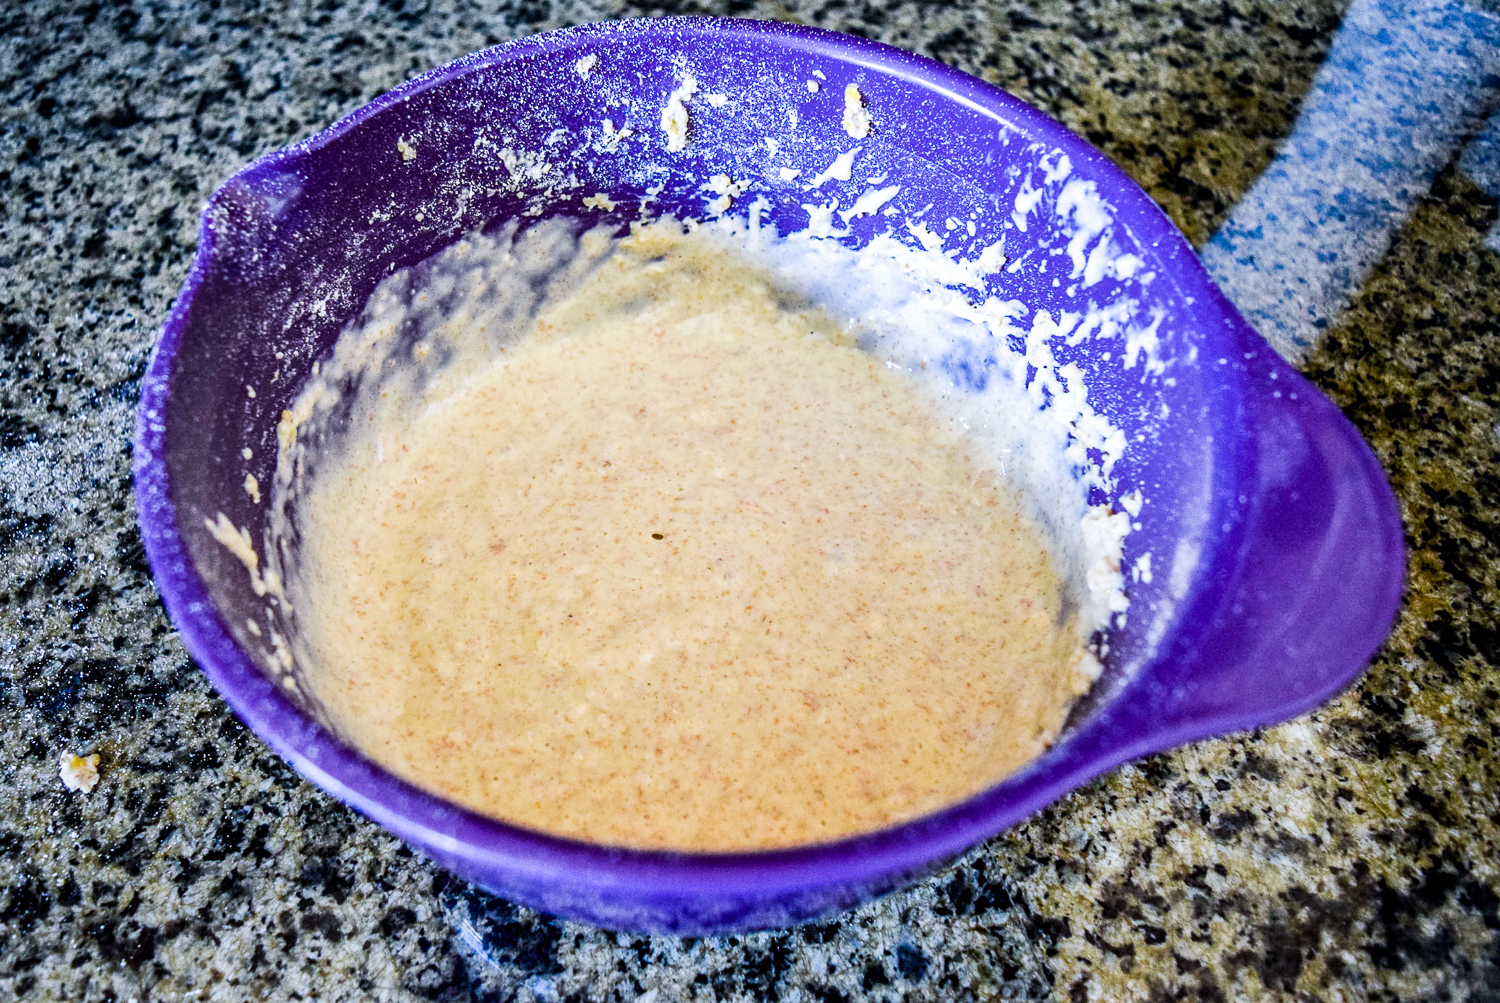 Trader Joe's Multigrain Baking & Pancake Mix, Milk, Canola Oil, and Eggs mixed together in KitchenAid Mixing Bowl to form pancake batter